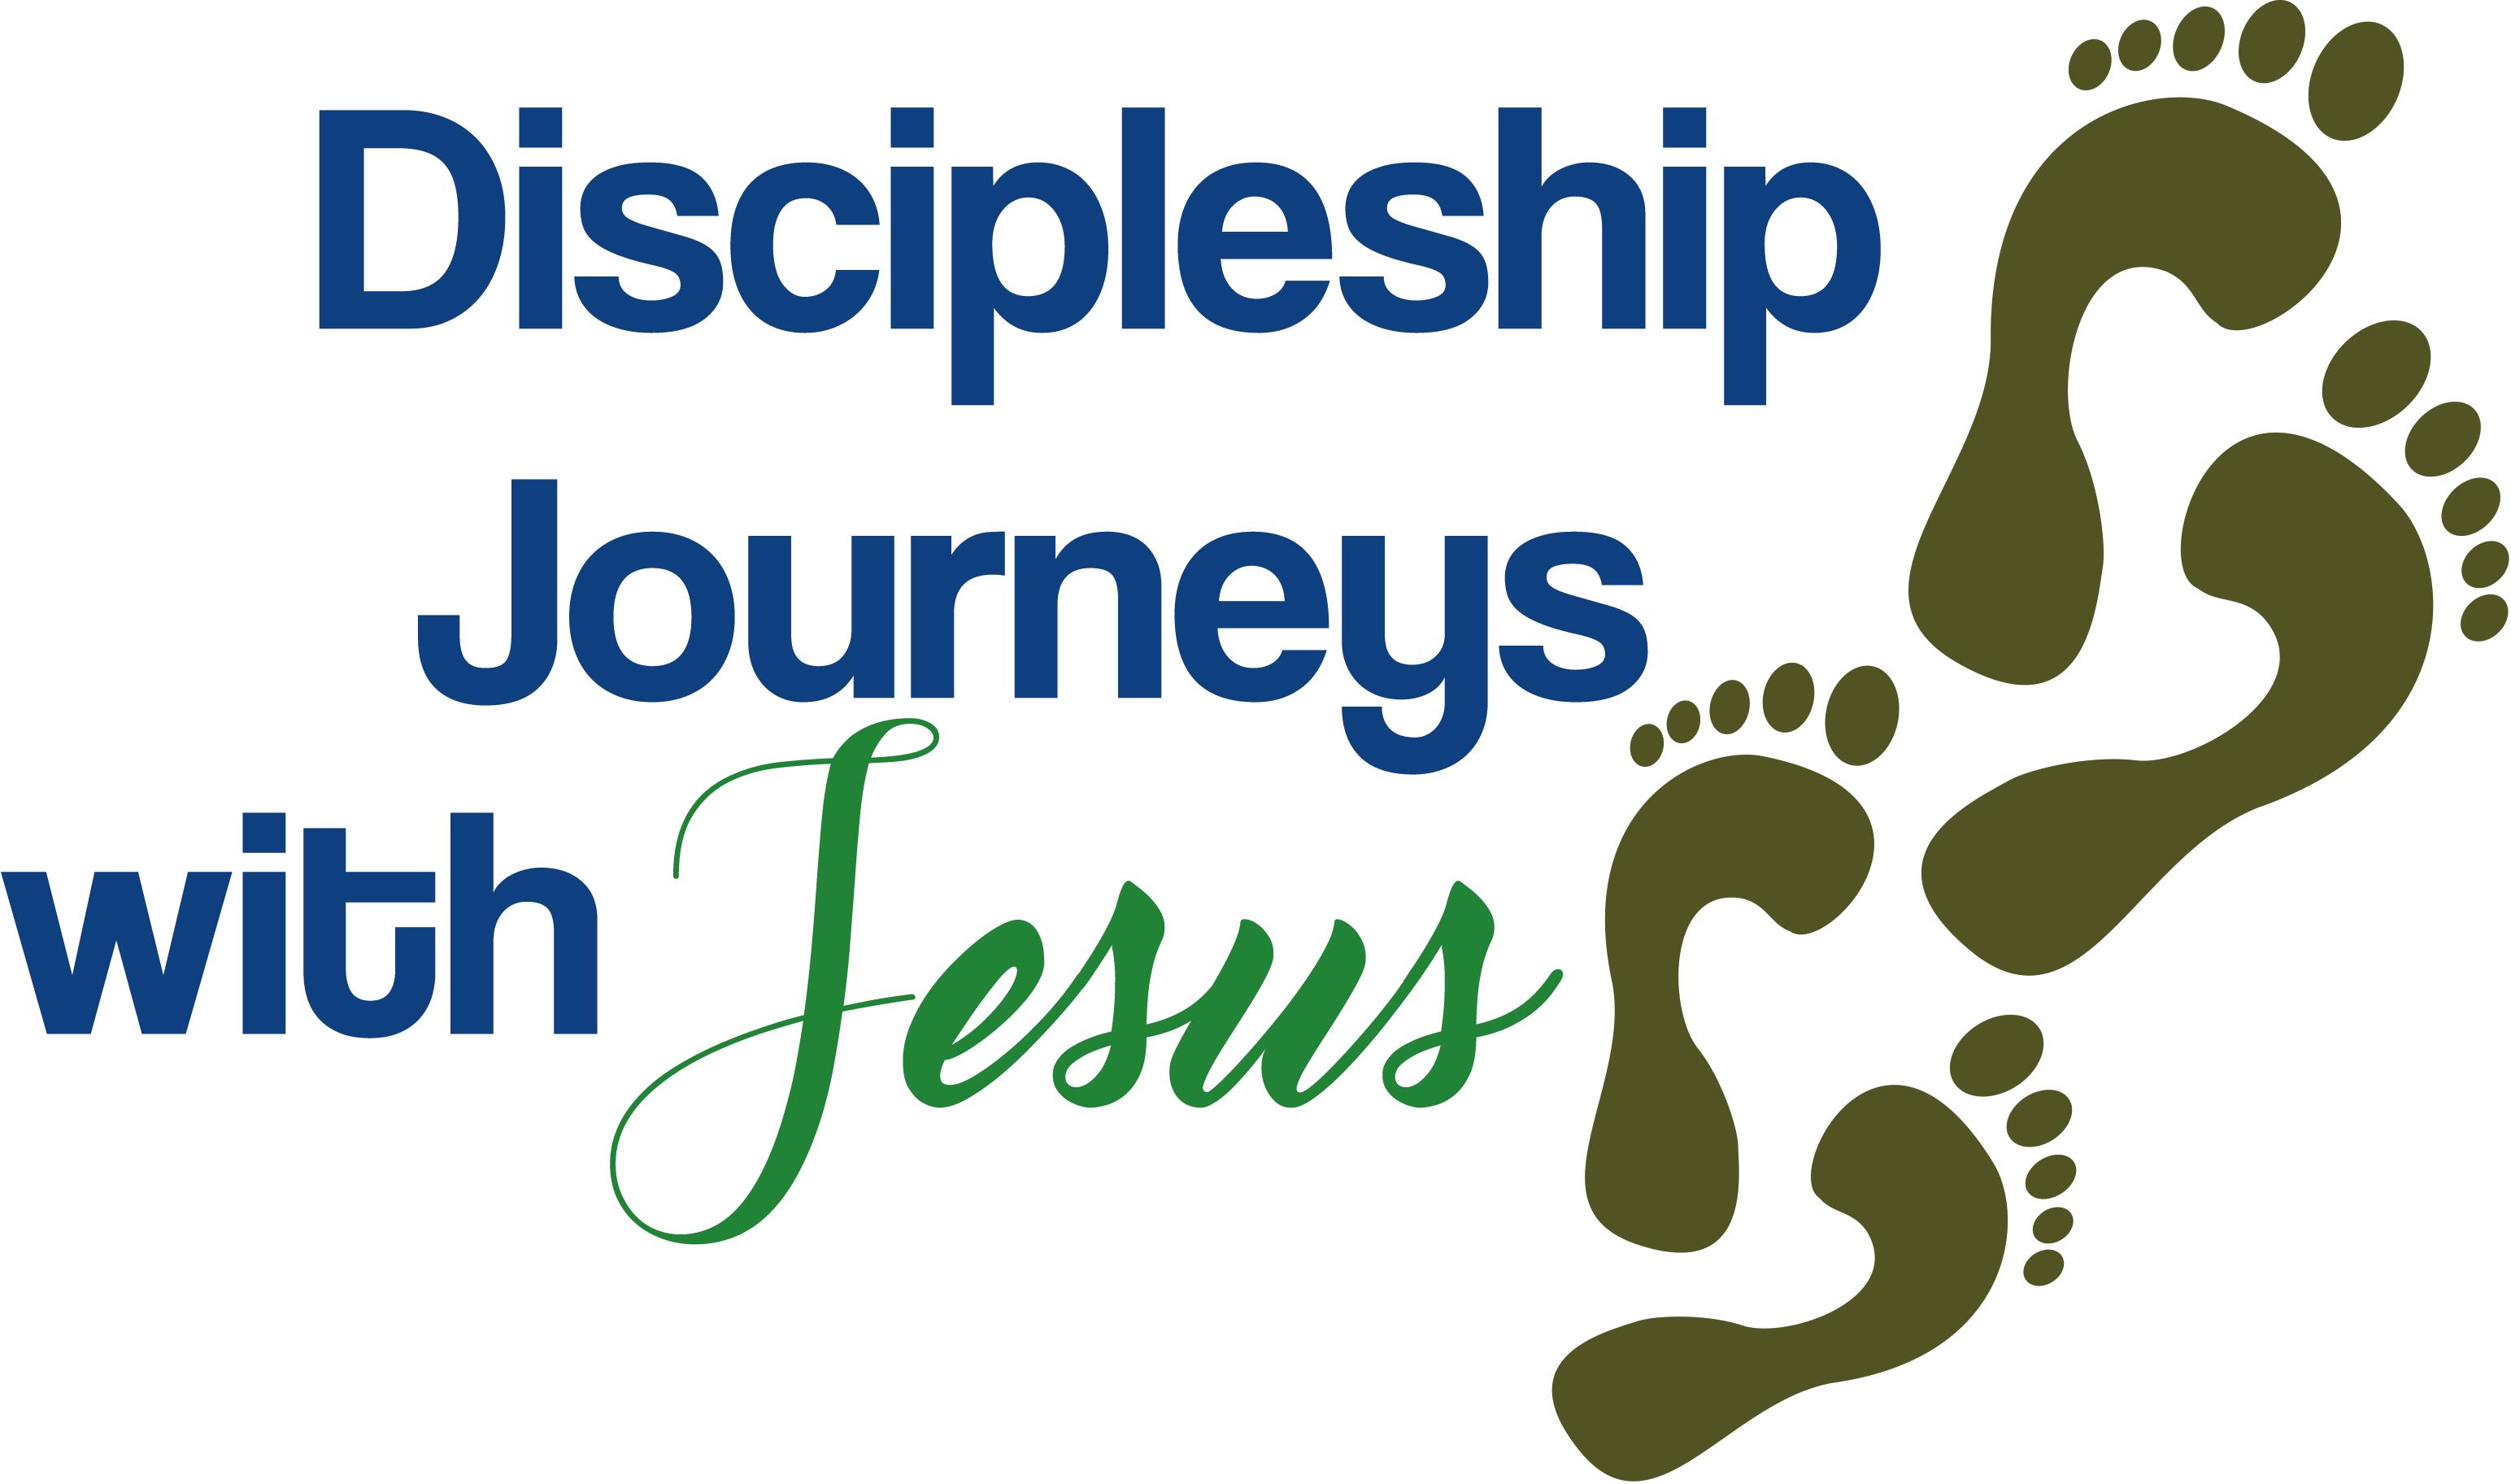 Discipleship Journeys with Jesus